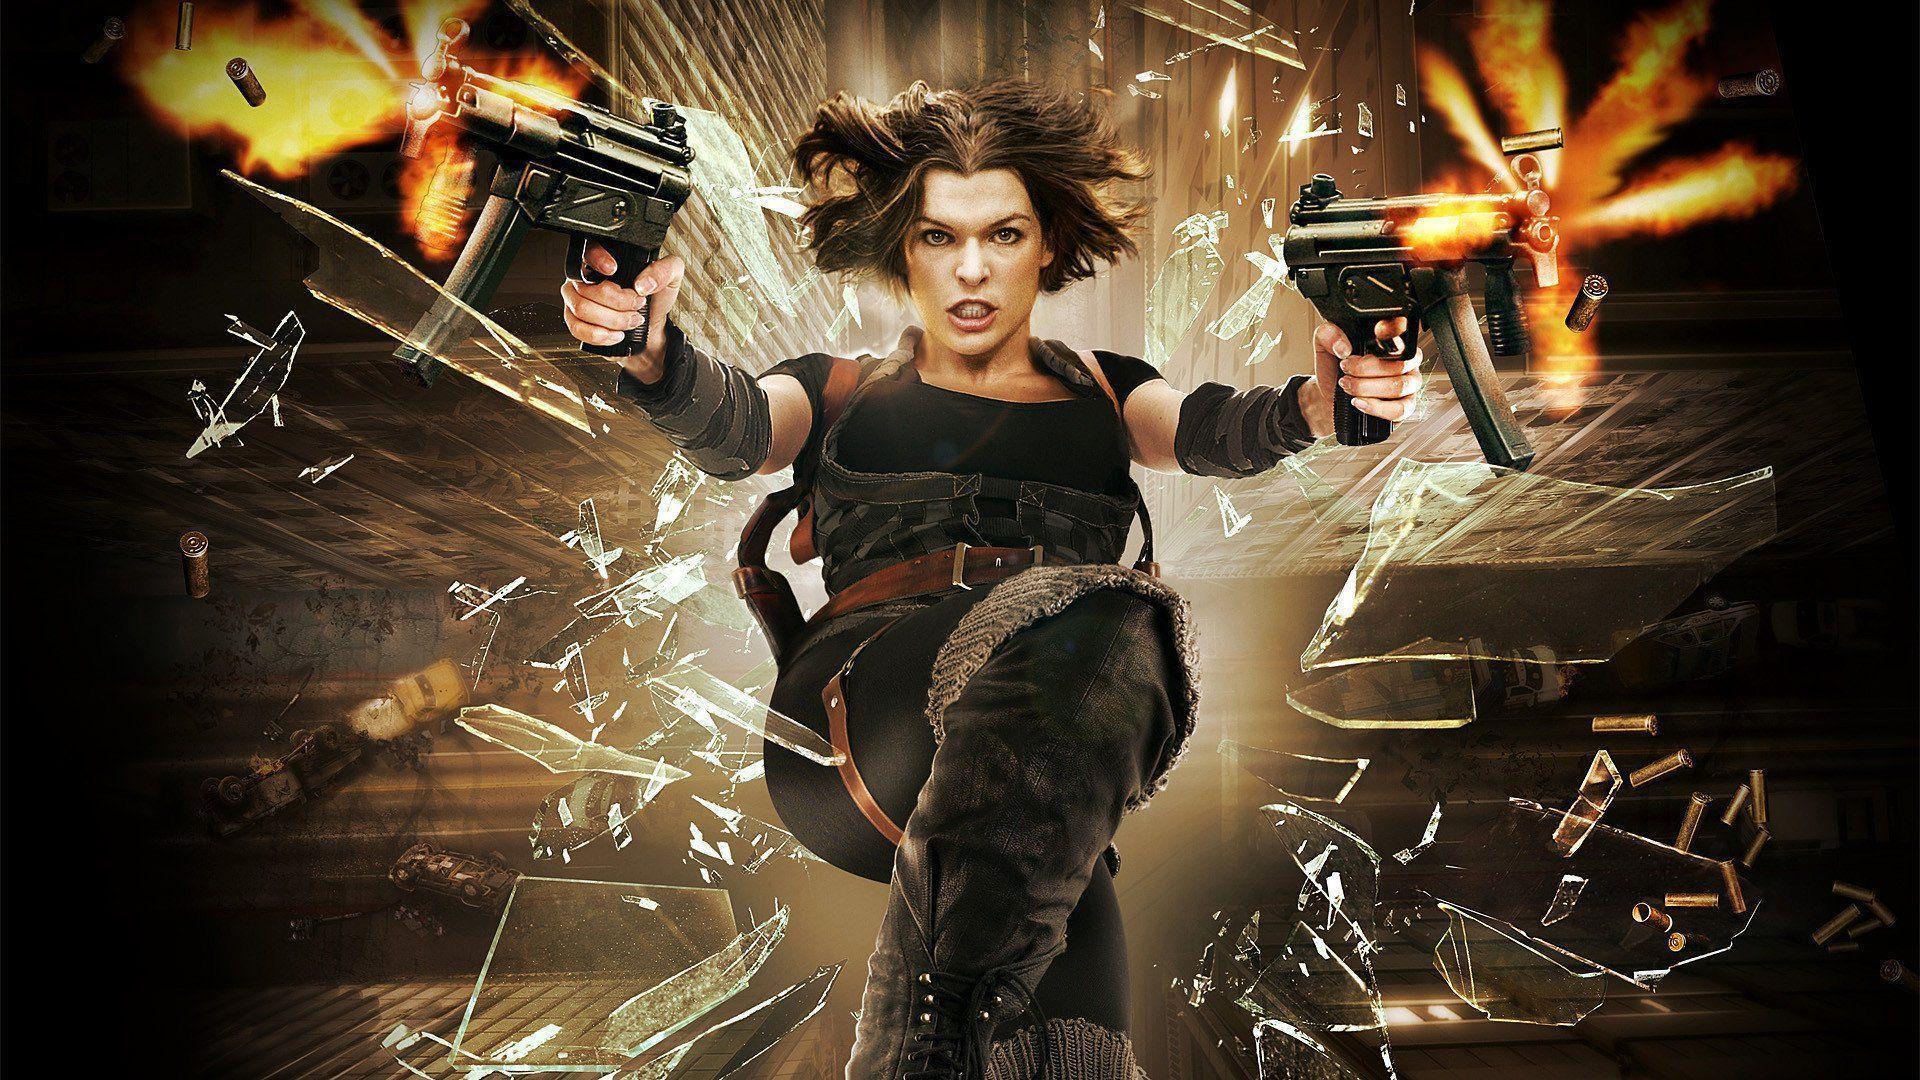 Resident Evil: The Final Chapter HD Wallpaper